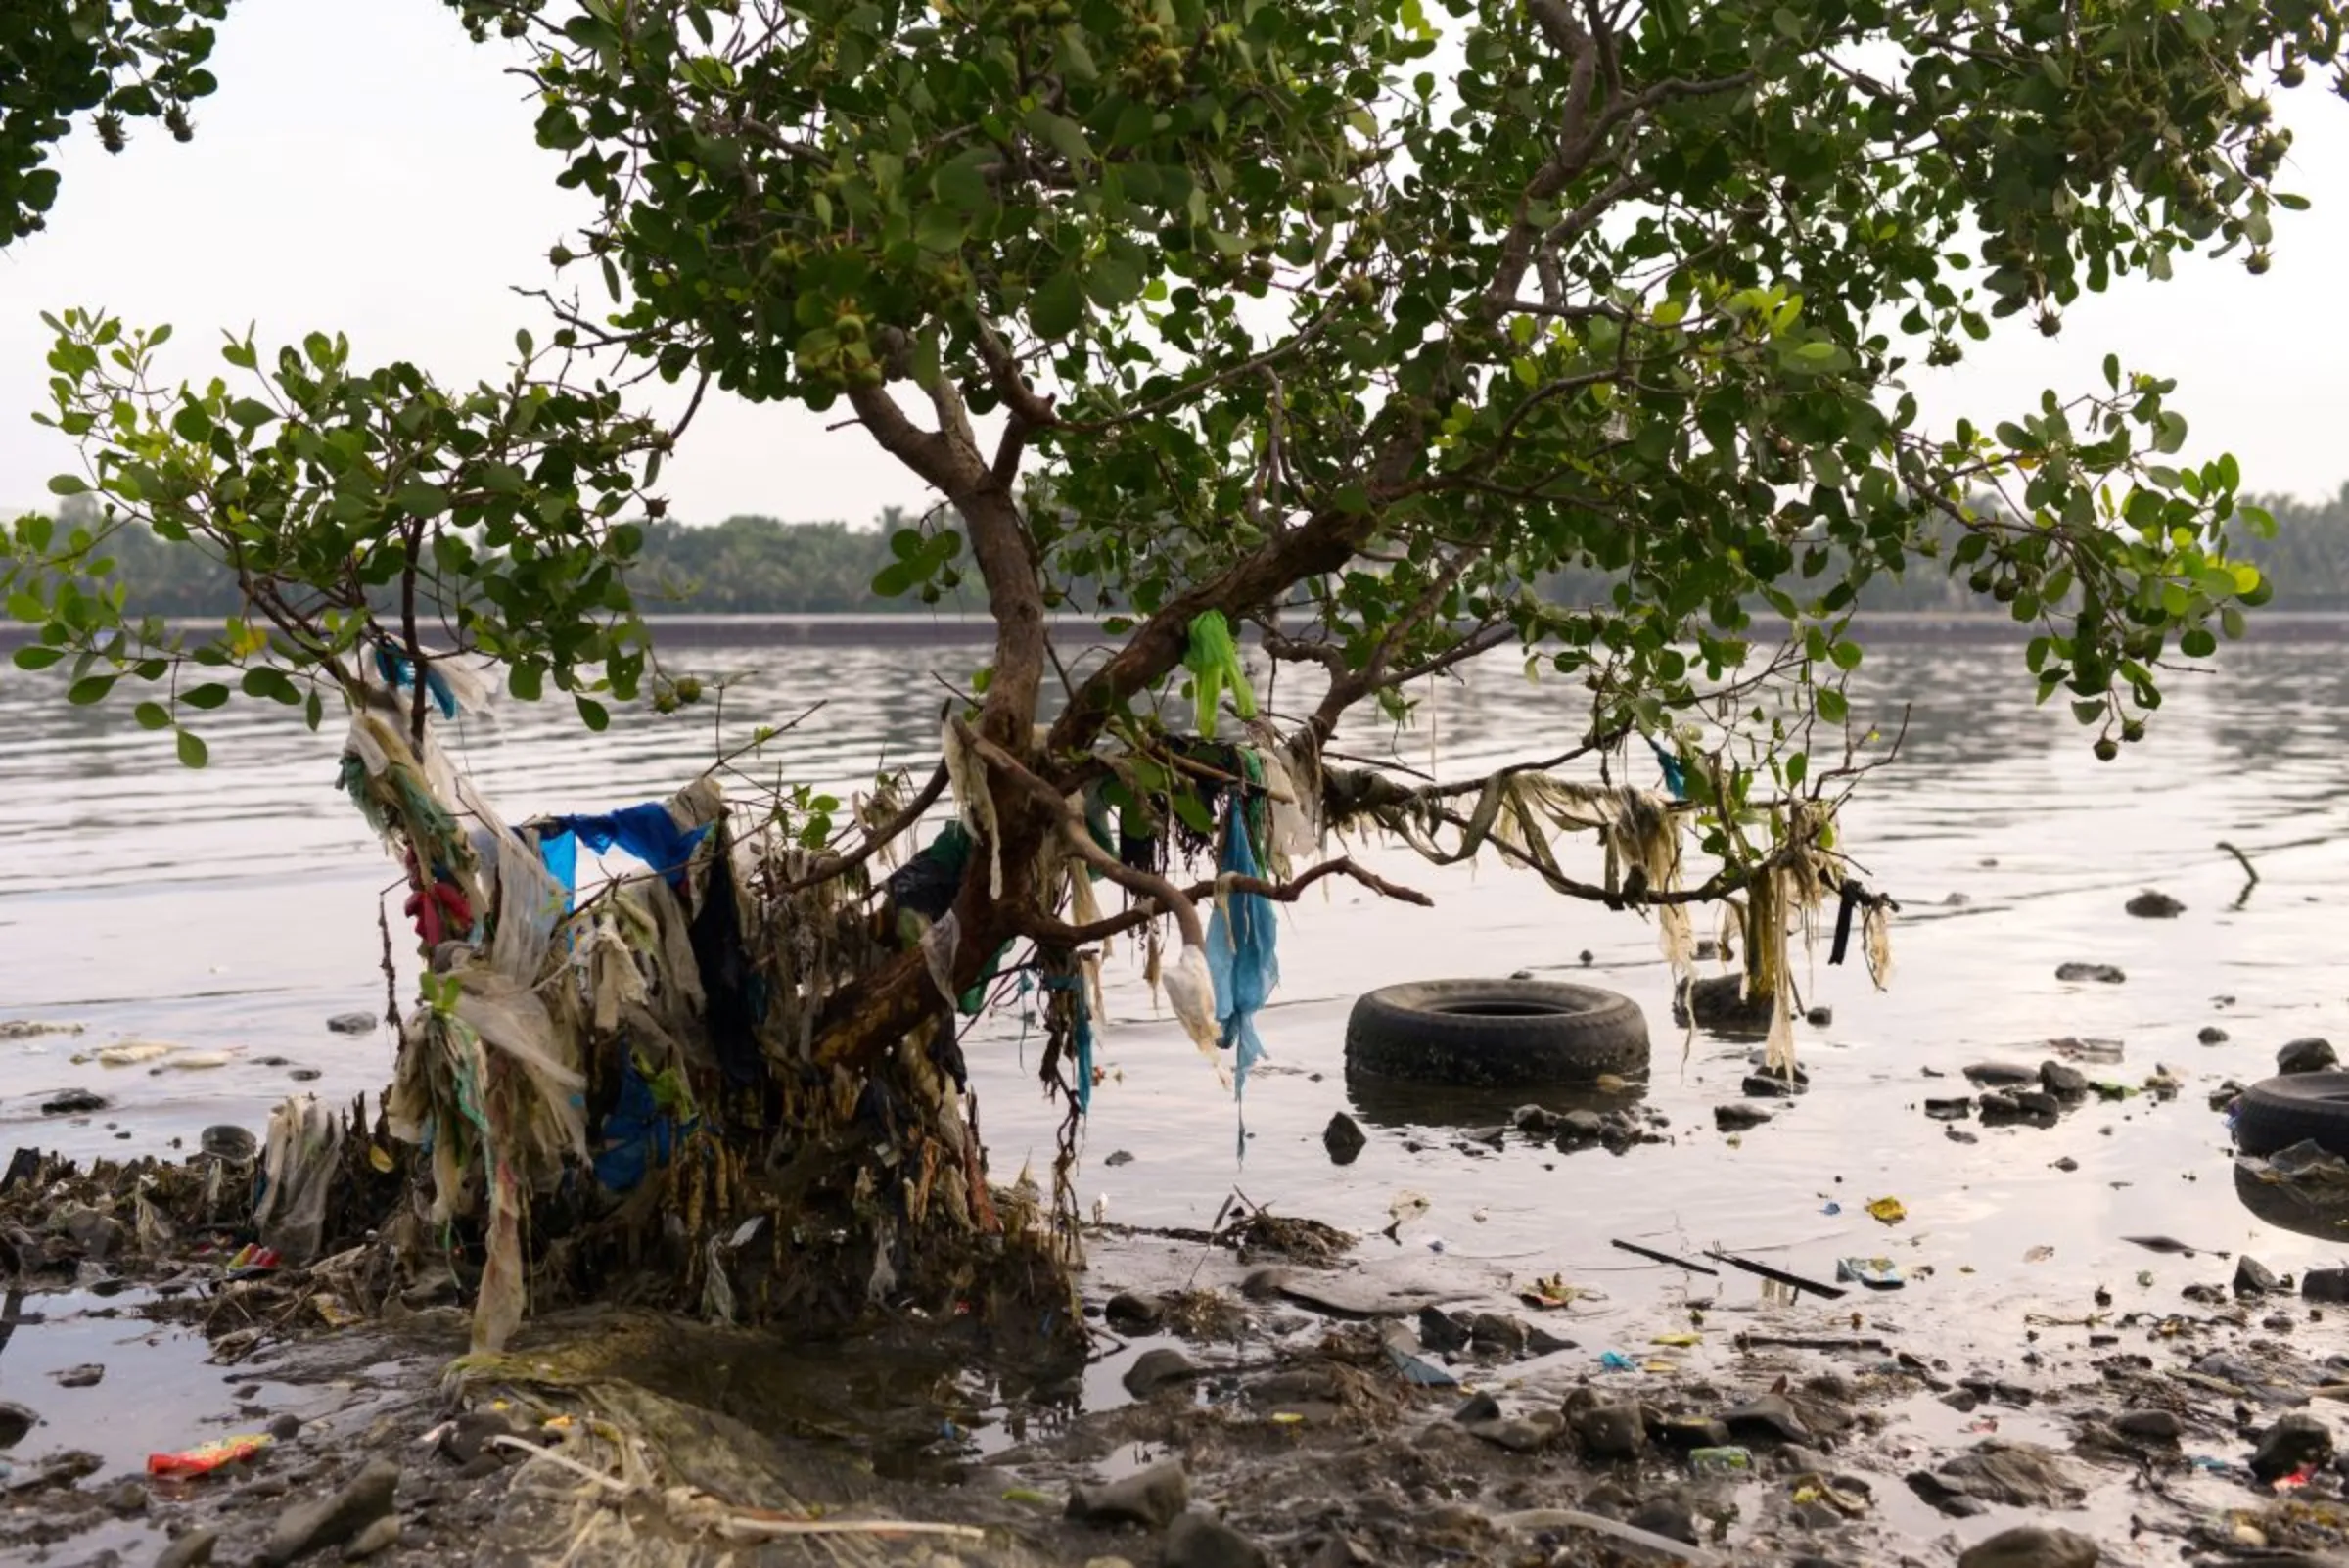 Plastic trash is stuck between mangroves in Freedom Island, Paranaque City, Metro Manila, Philippines August 20, 2019. REUTERS/Eloisa Lopez